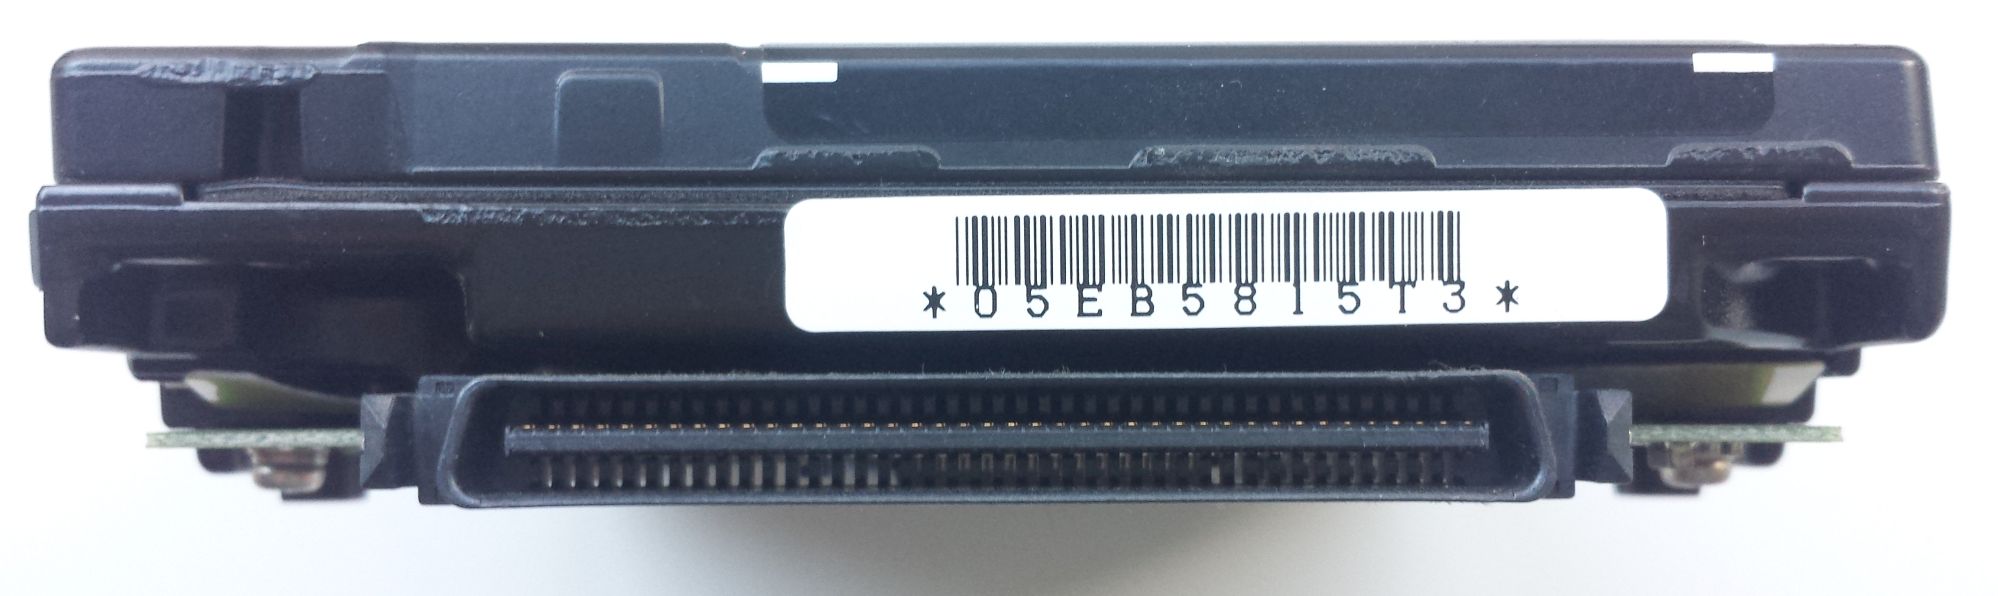 HDD SCSI Ultra Wide 80pins 3